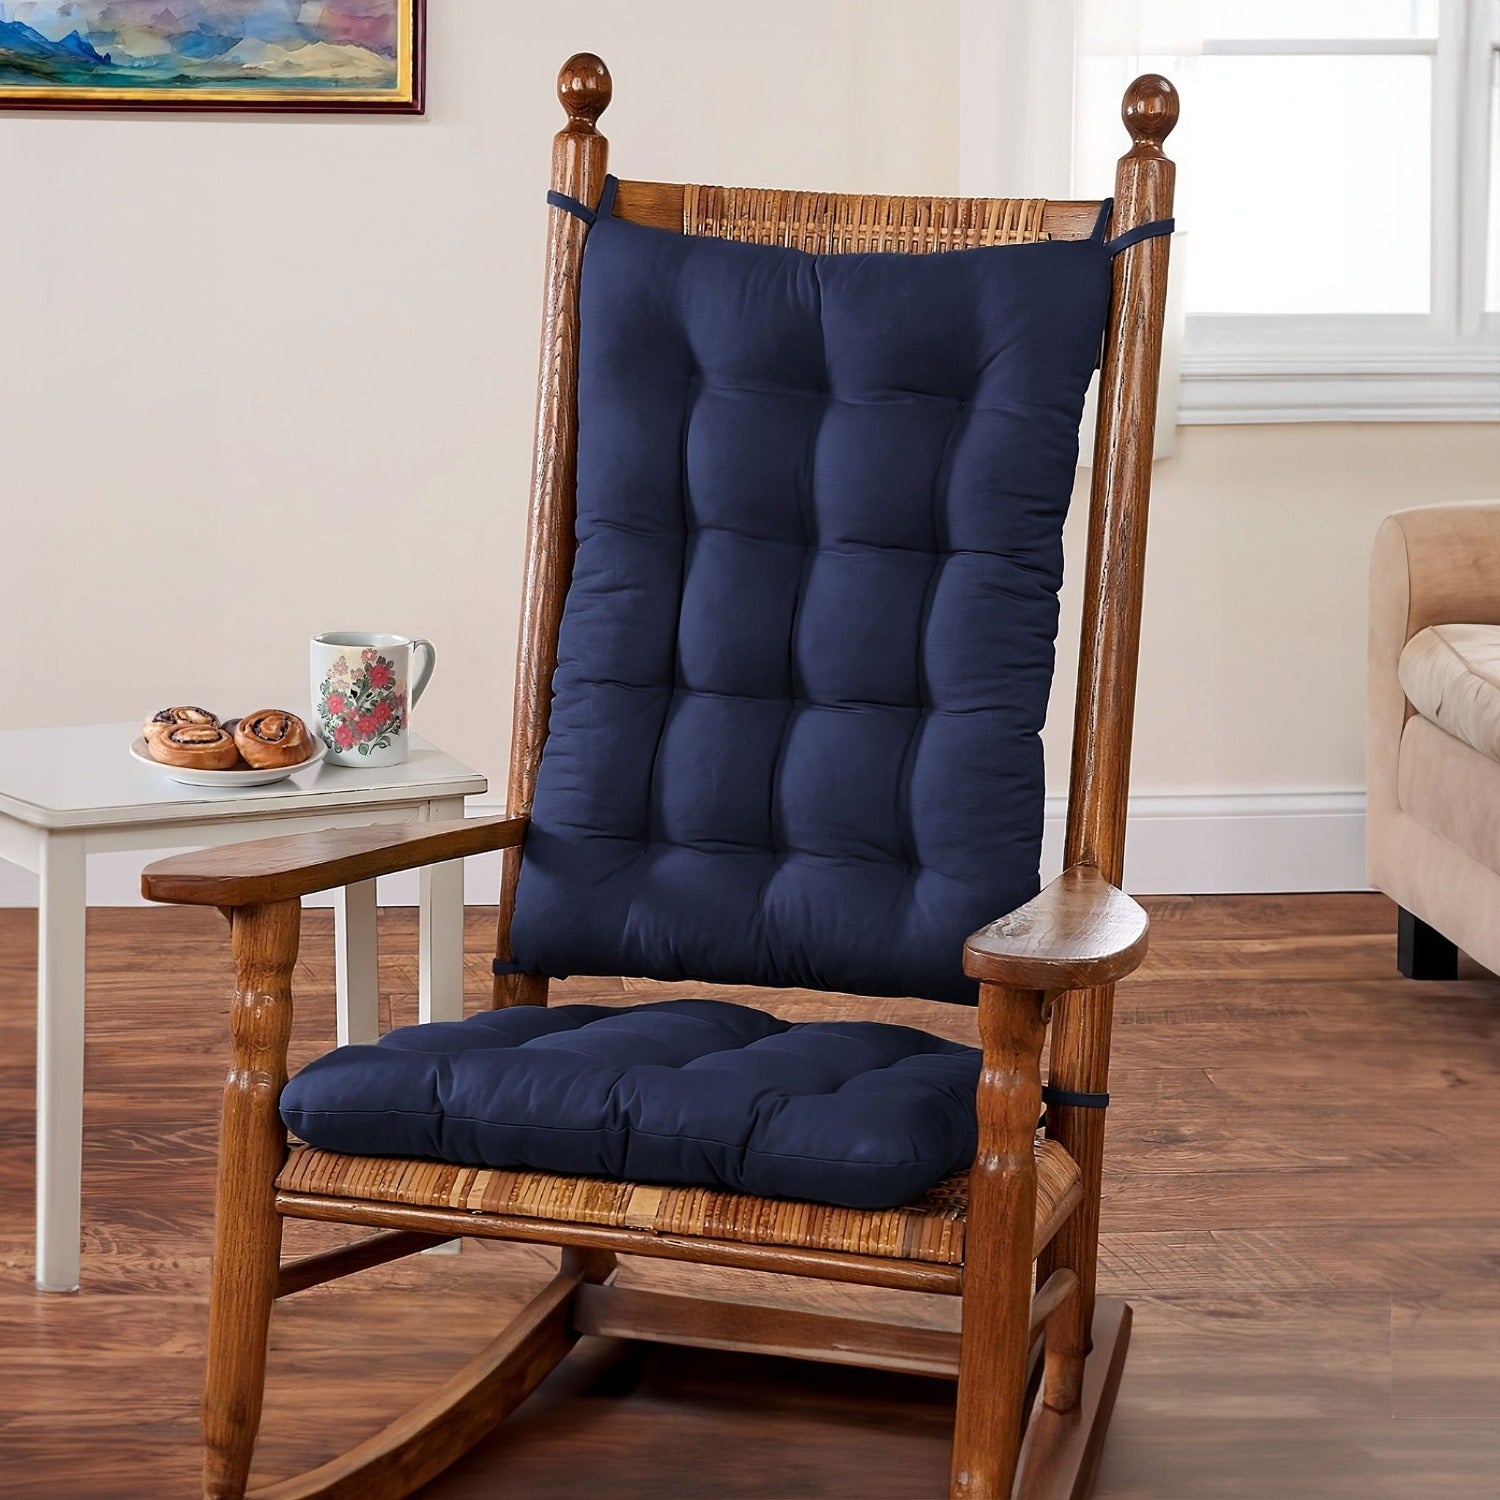 Universal Indoor Rocking Chair Cushion Alcott Hill Fabric: Cream